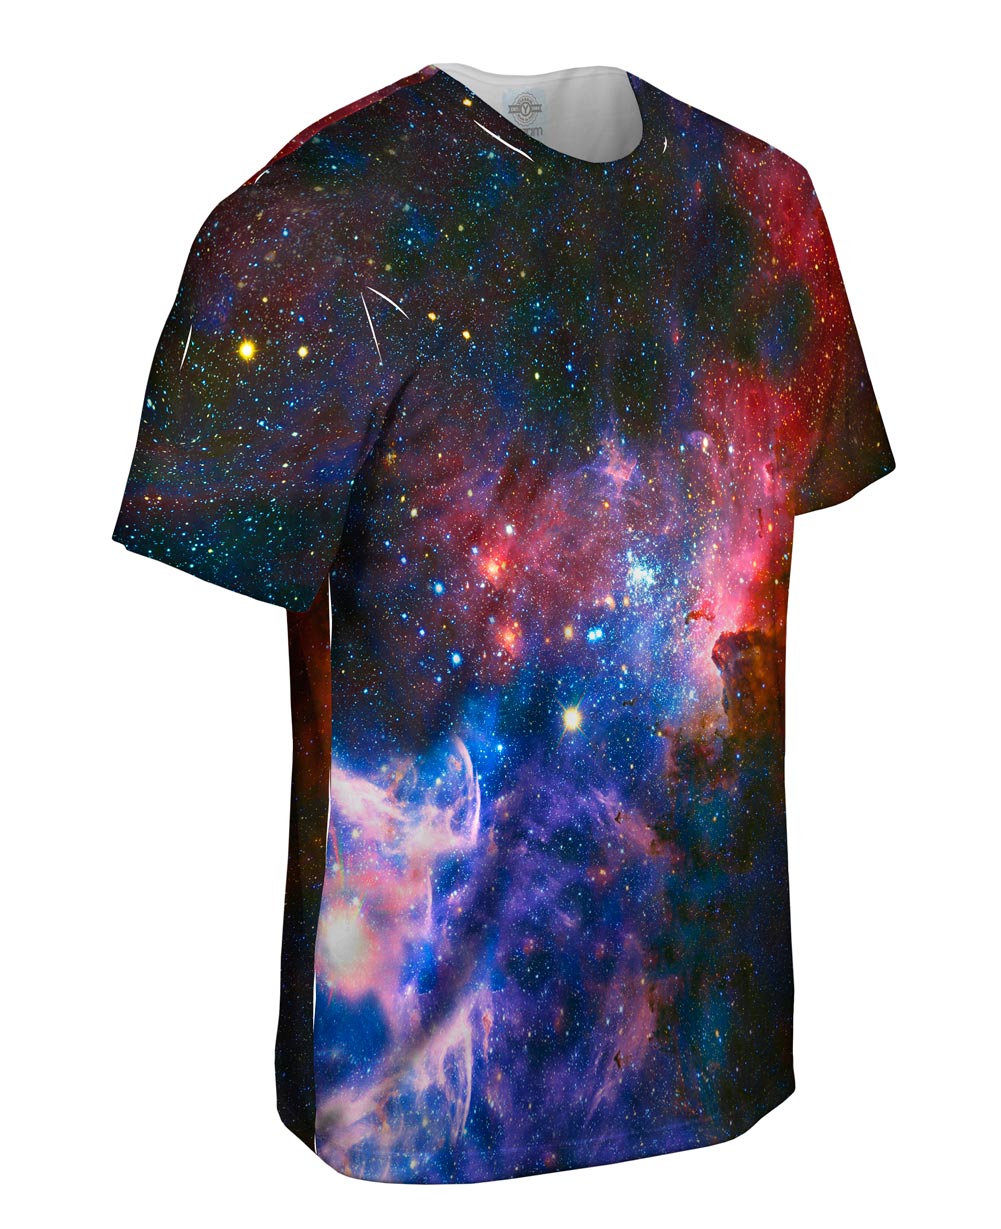 Yizzam- Carina Nebula Space Galaxy - New Men Unisex Tee Shirt XS S M L ...